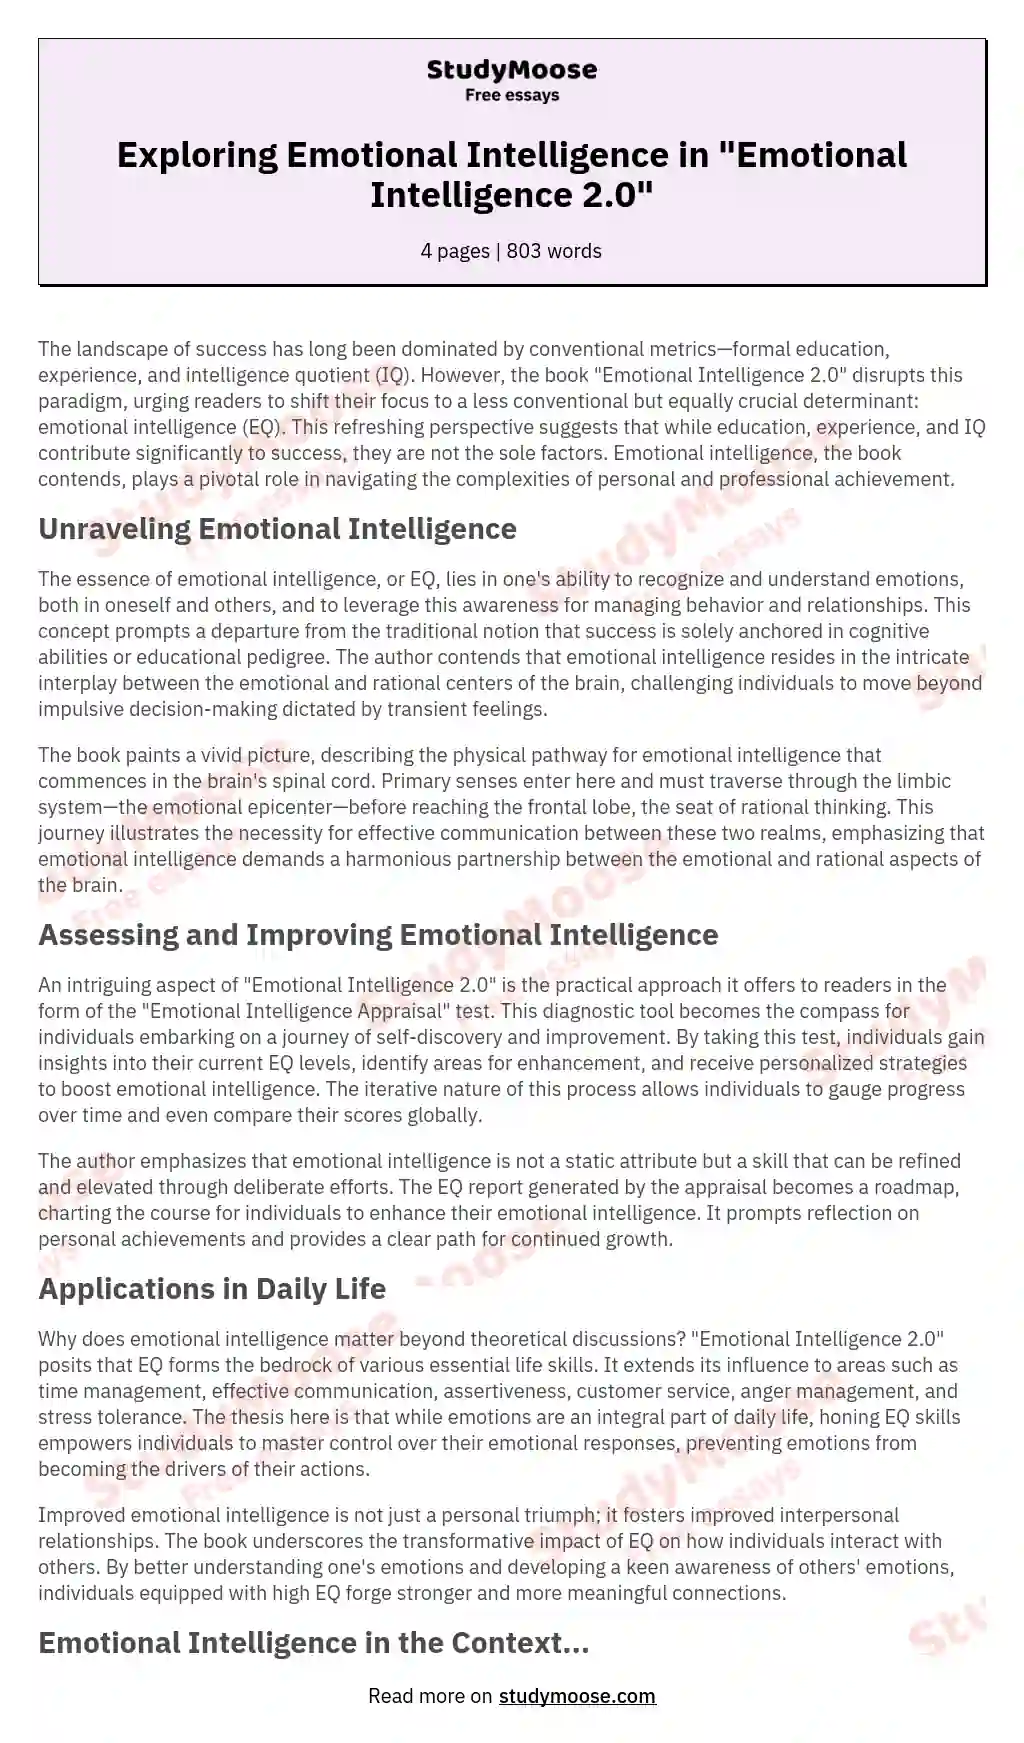 The Role of Emotional Intelligence in 'Emotional Intelligence 2.0' essay